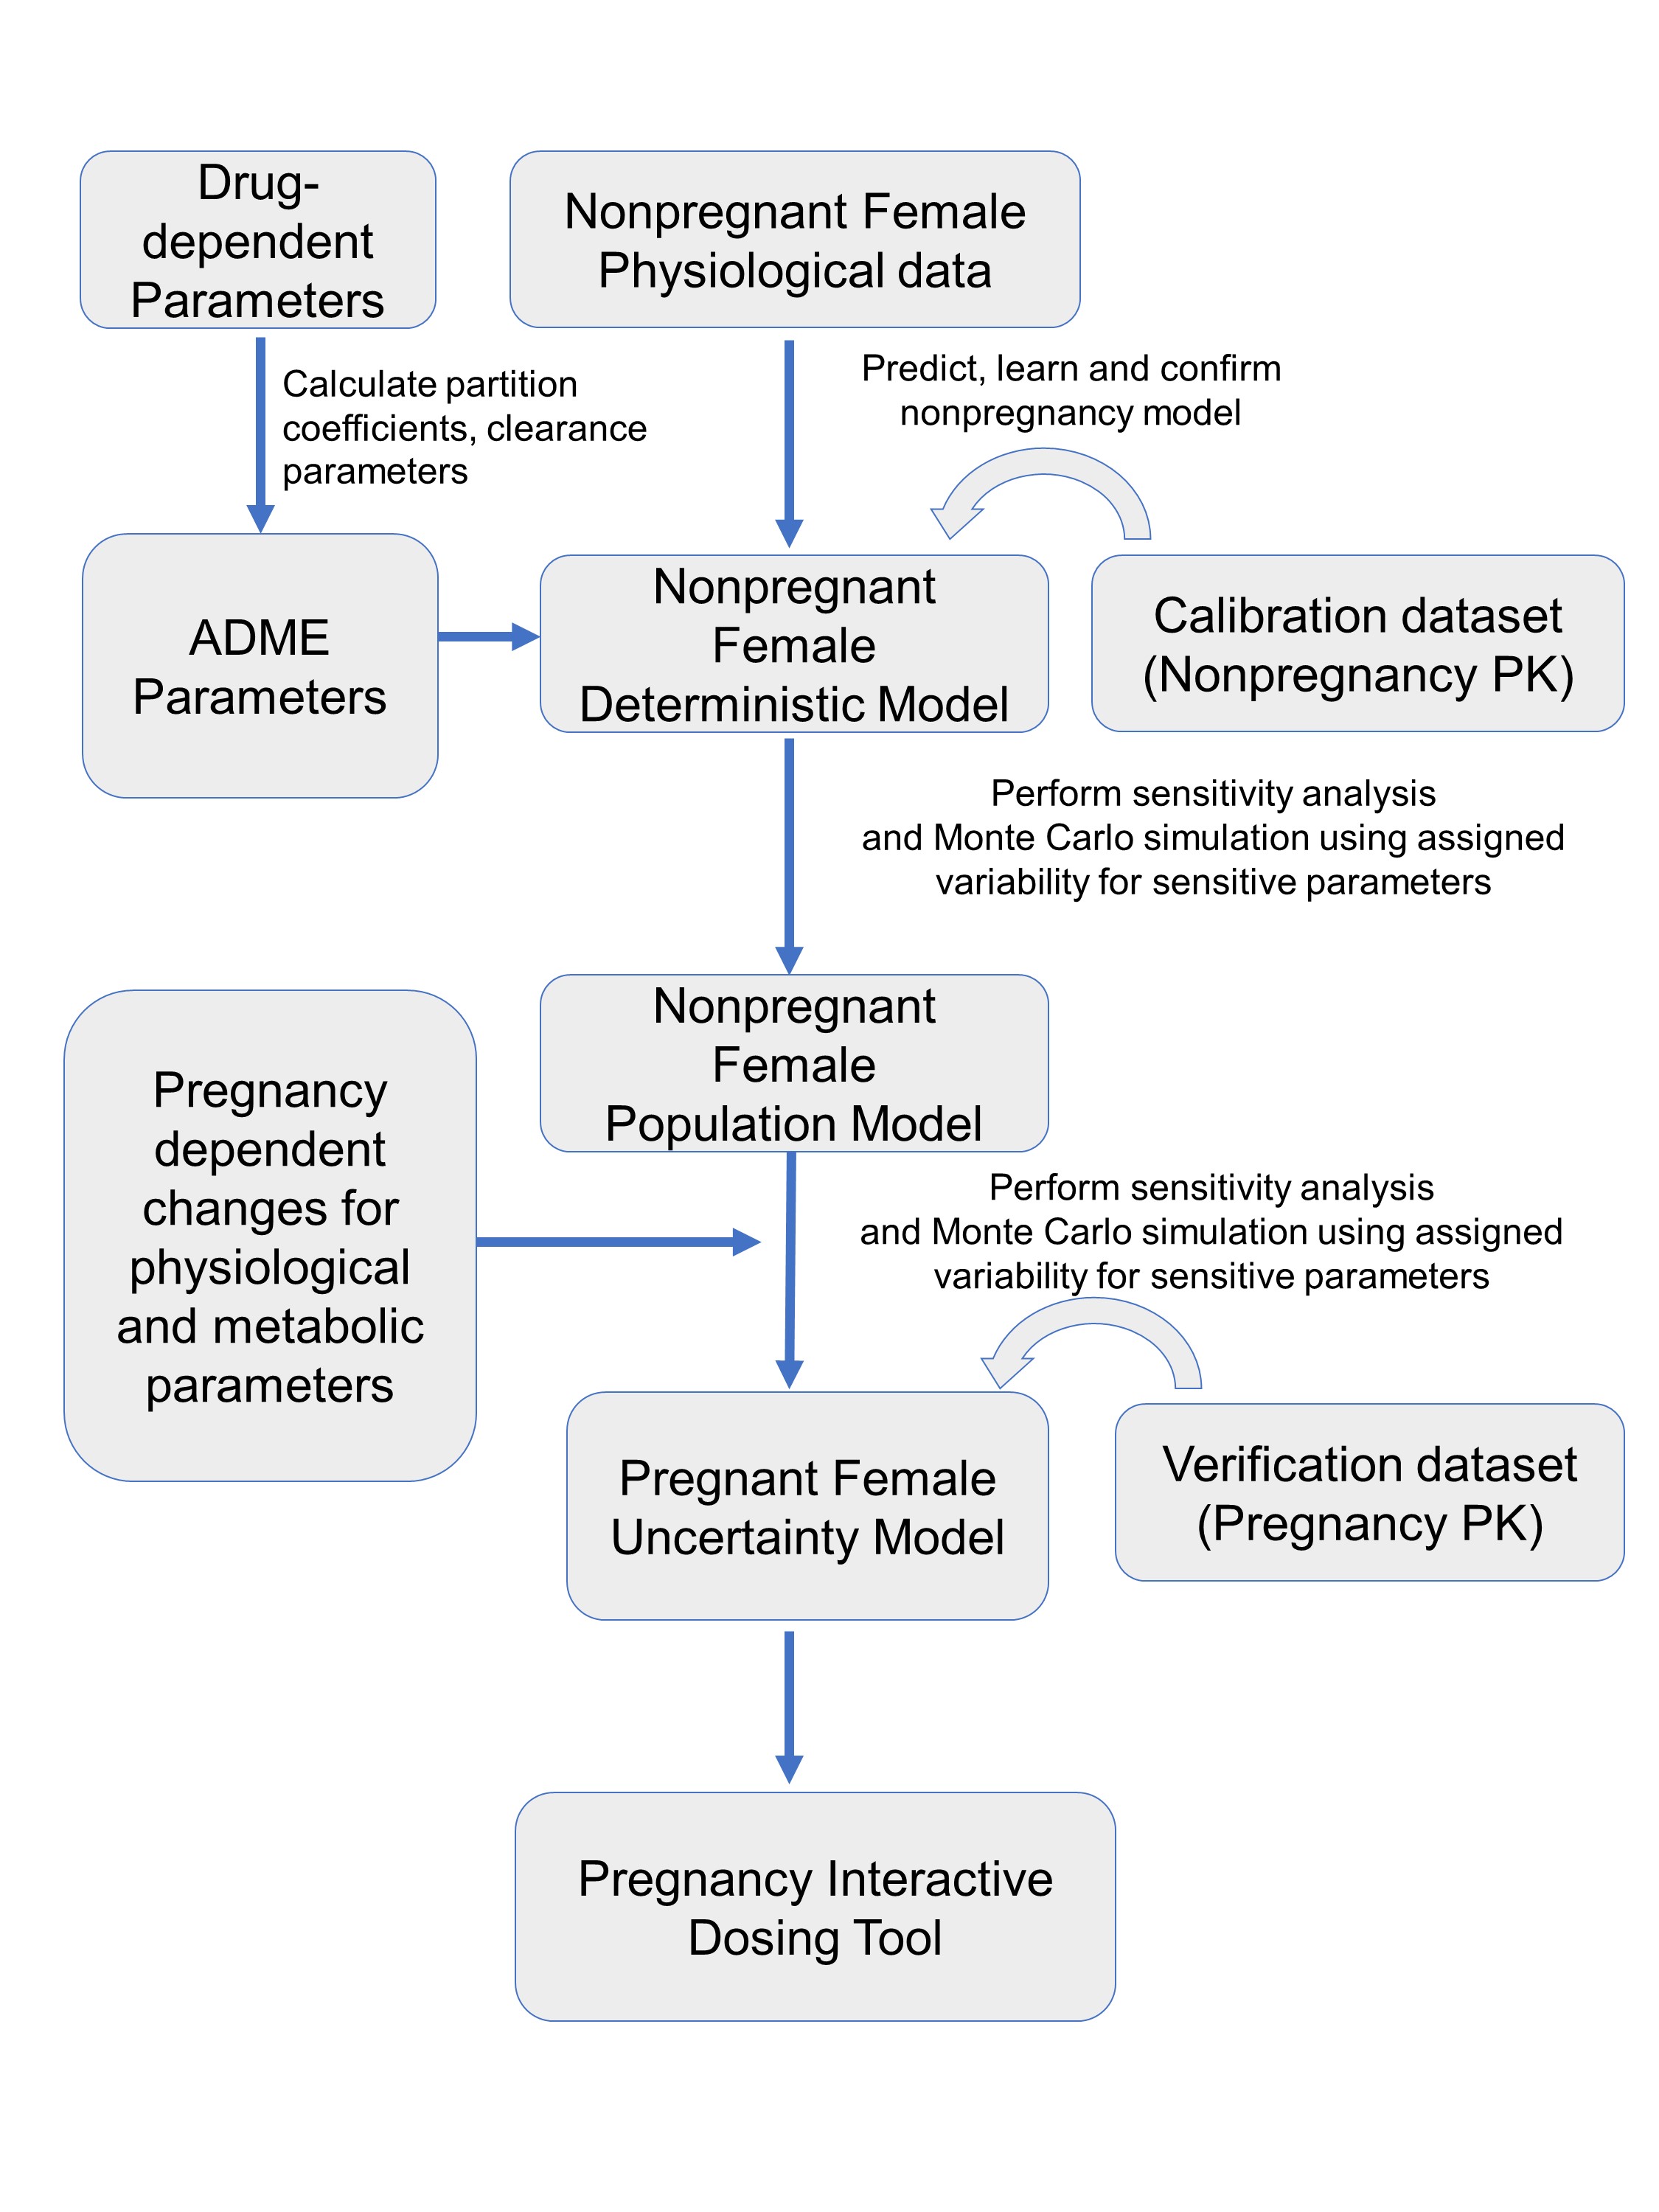 Flowchart describing Pregnancy Interactive Dosing Tool